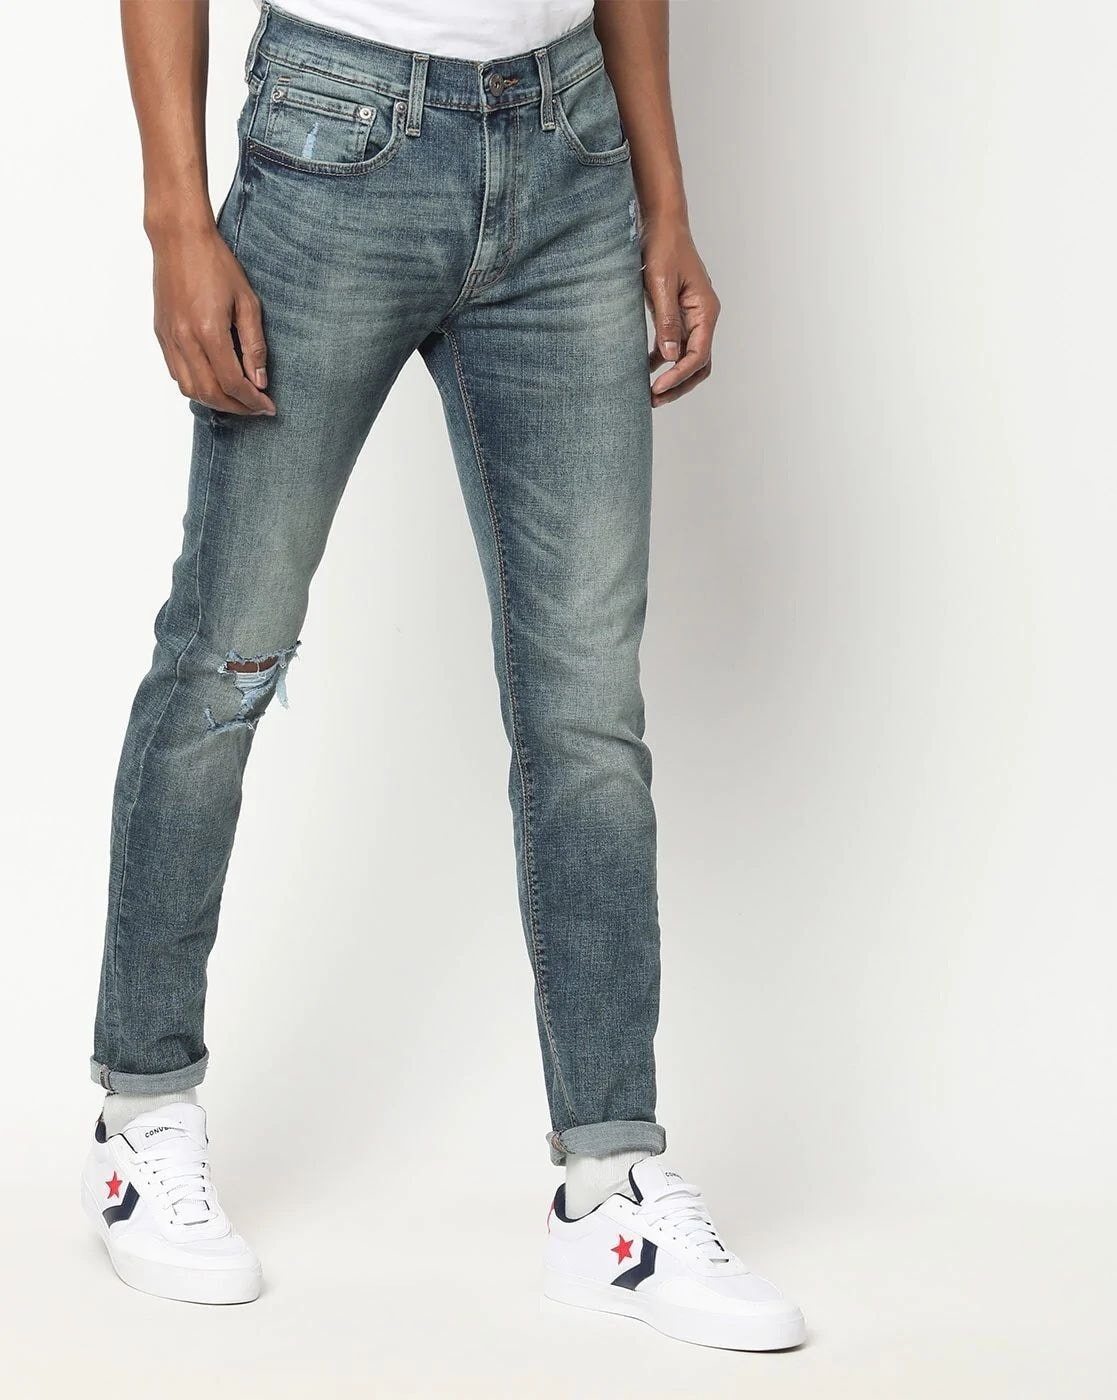 Buy Grey Jeans for Men by DENIZEN FROM LEVIS Online 